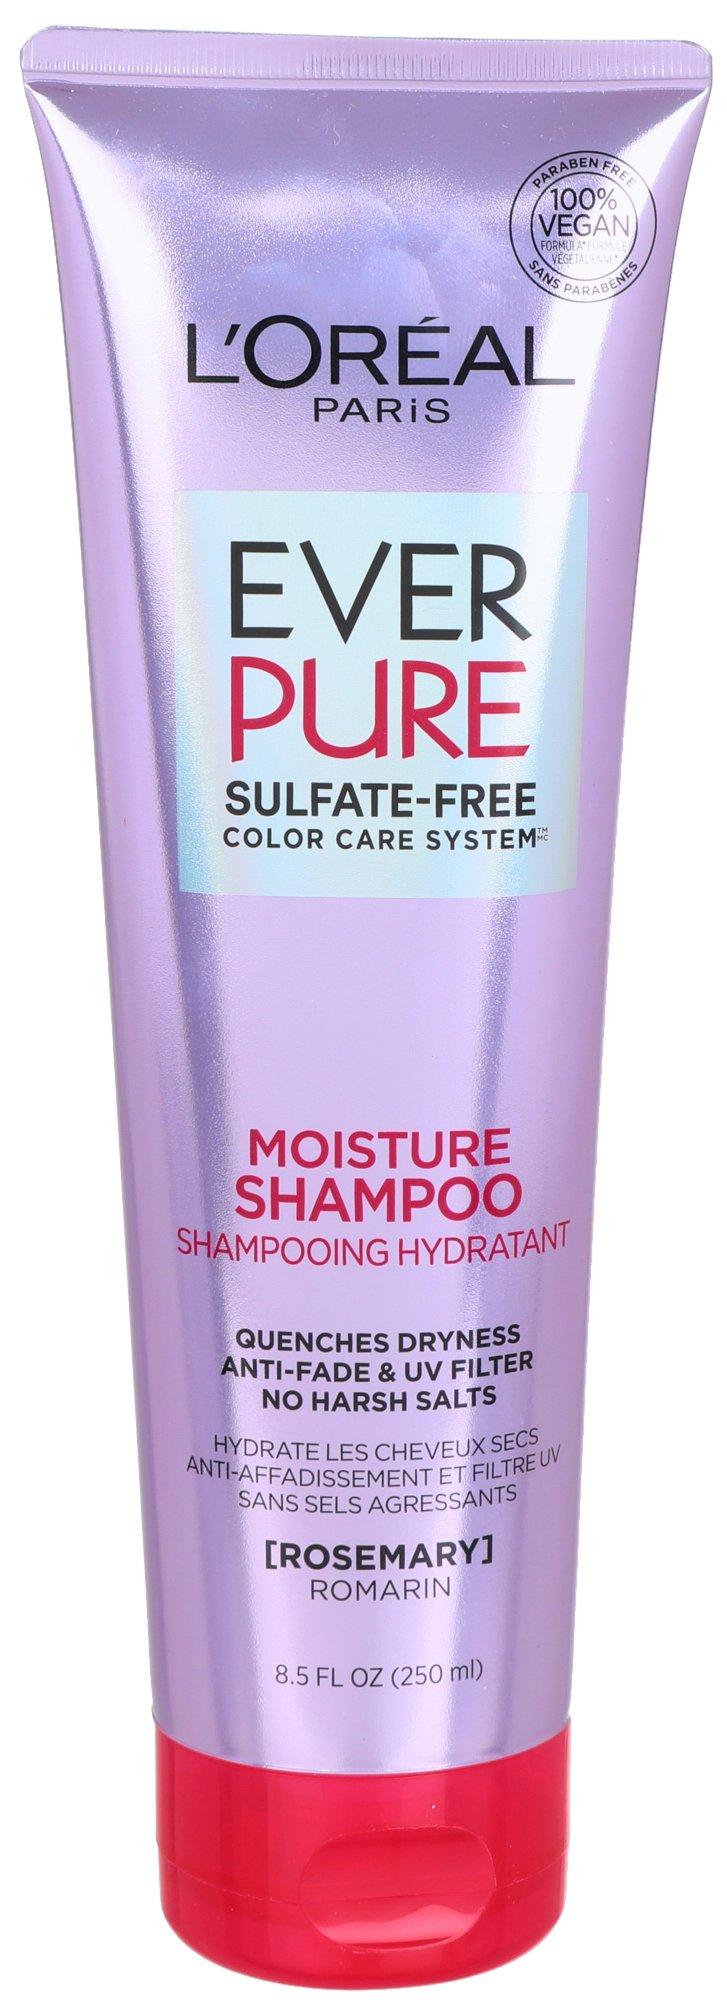 L'Oreal Ever Pure Rosemary Moisture Shampoo 8.5 Fl. Oz.